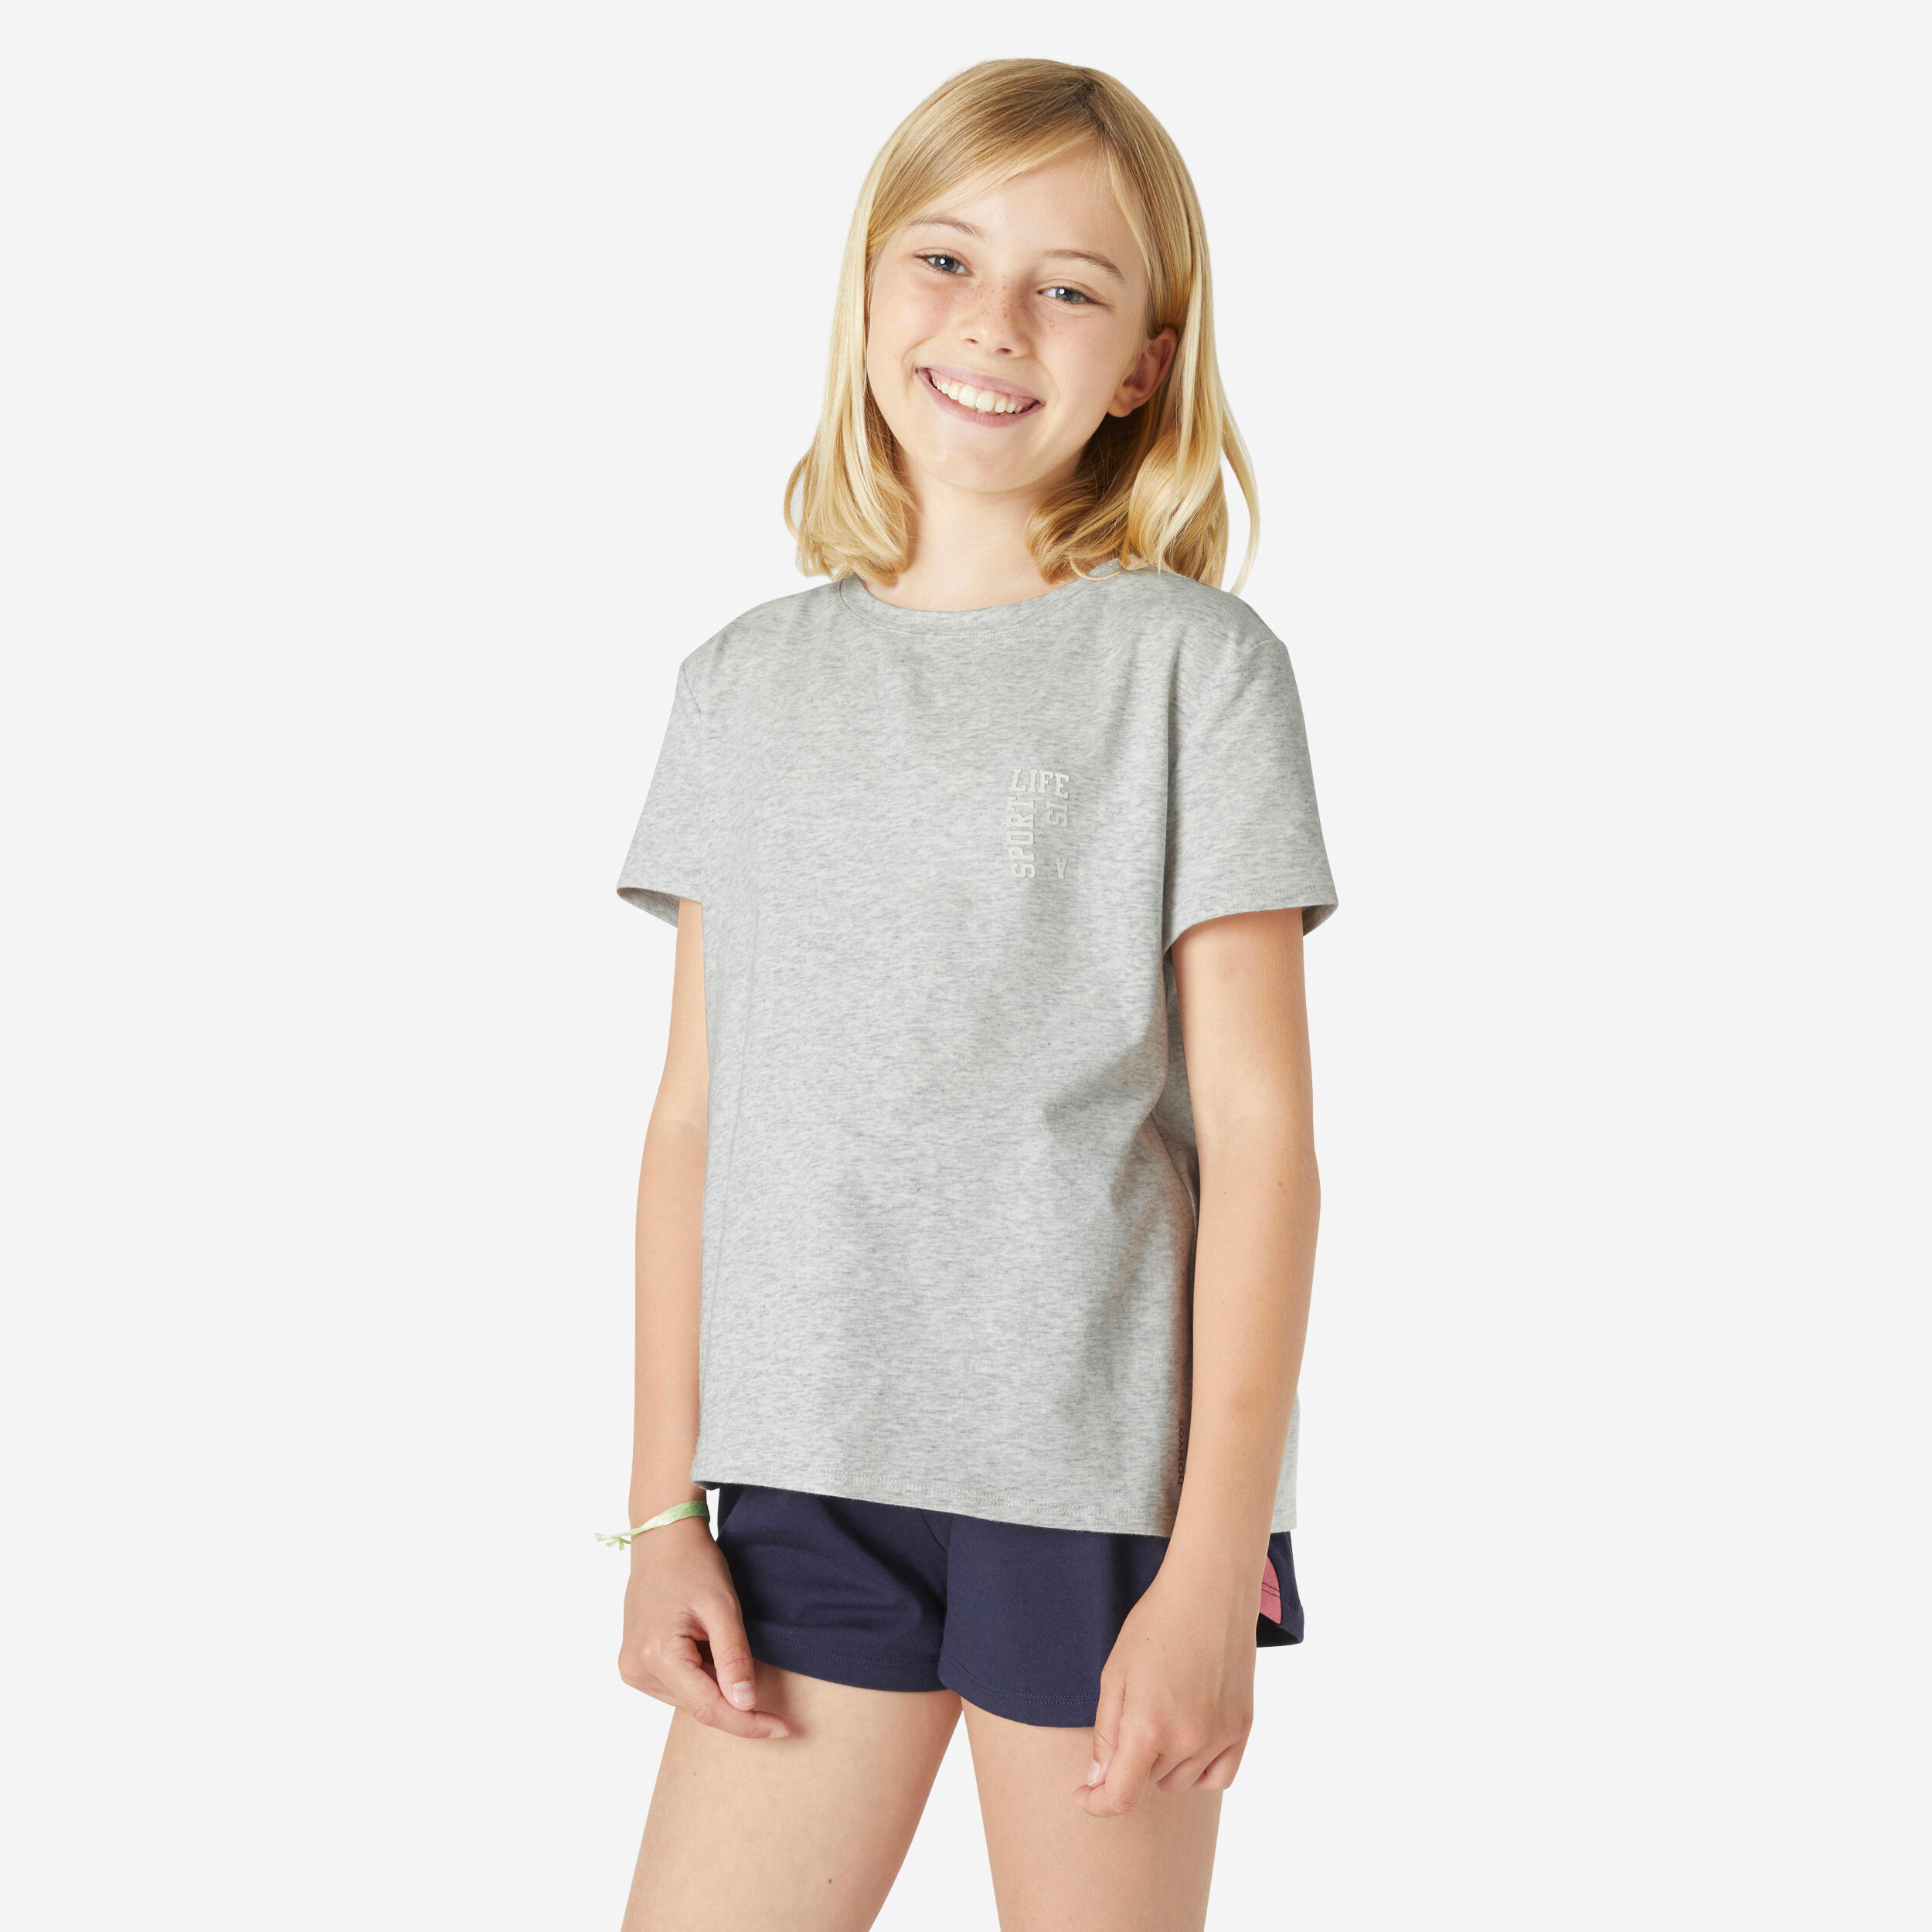 Girls' Cotton T-Shirt 500 - Grey 1/7